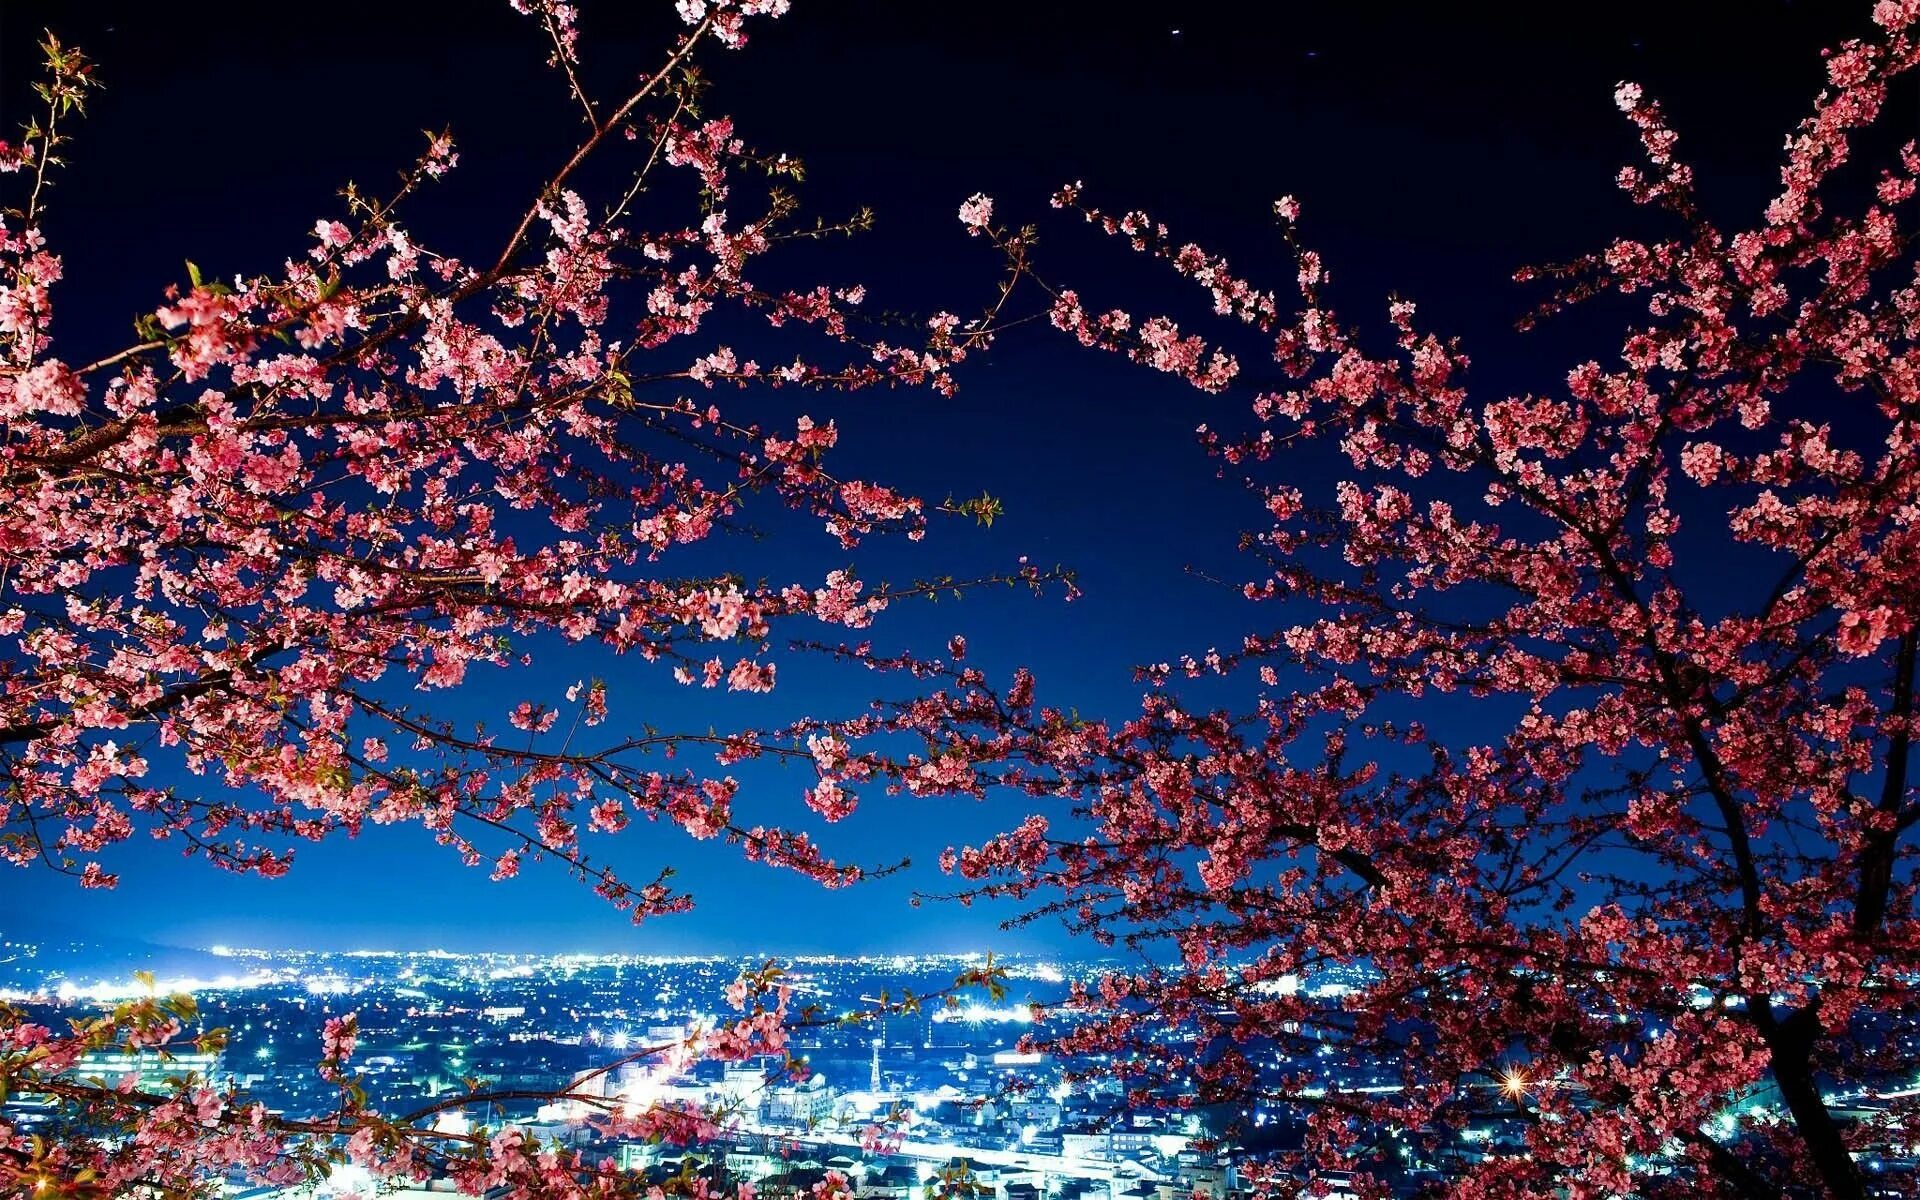 Корея черри блоссом. Токио Сакура. Ночной Токио Сакура. Сакура черри блоссом. Sakura blossom